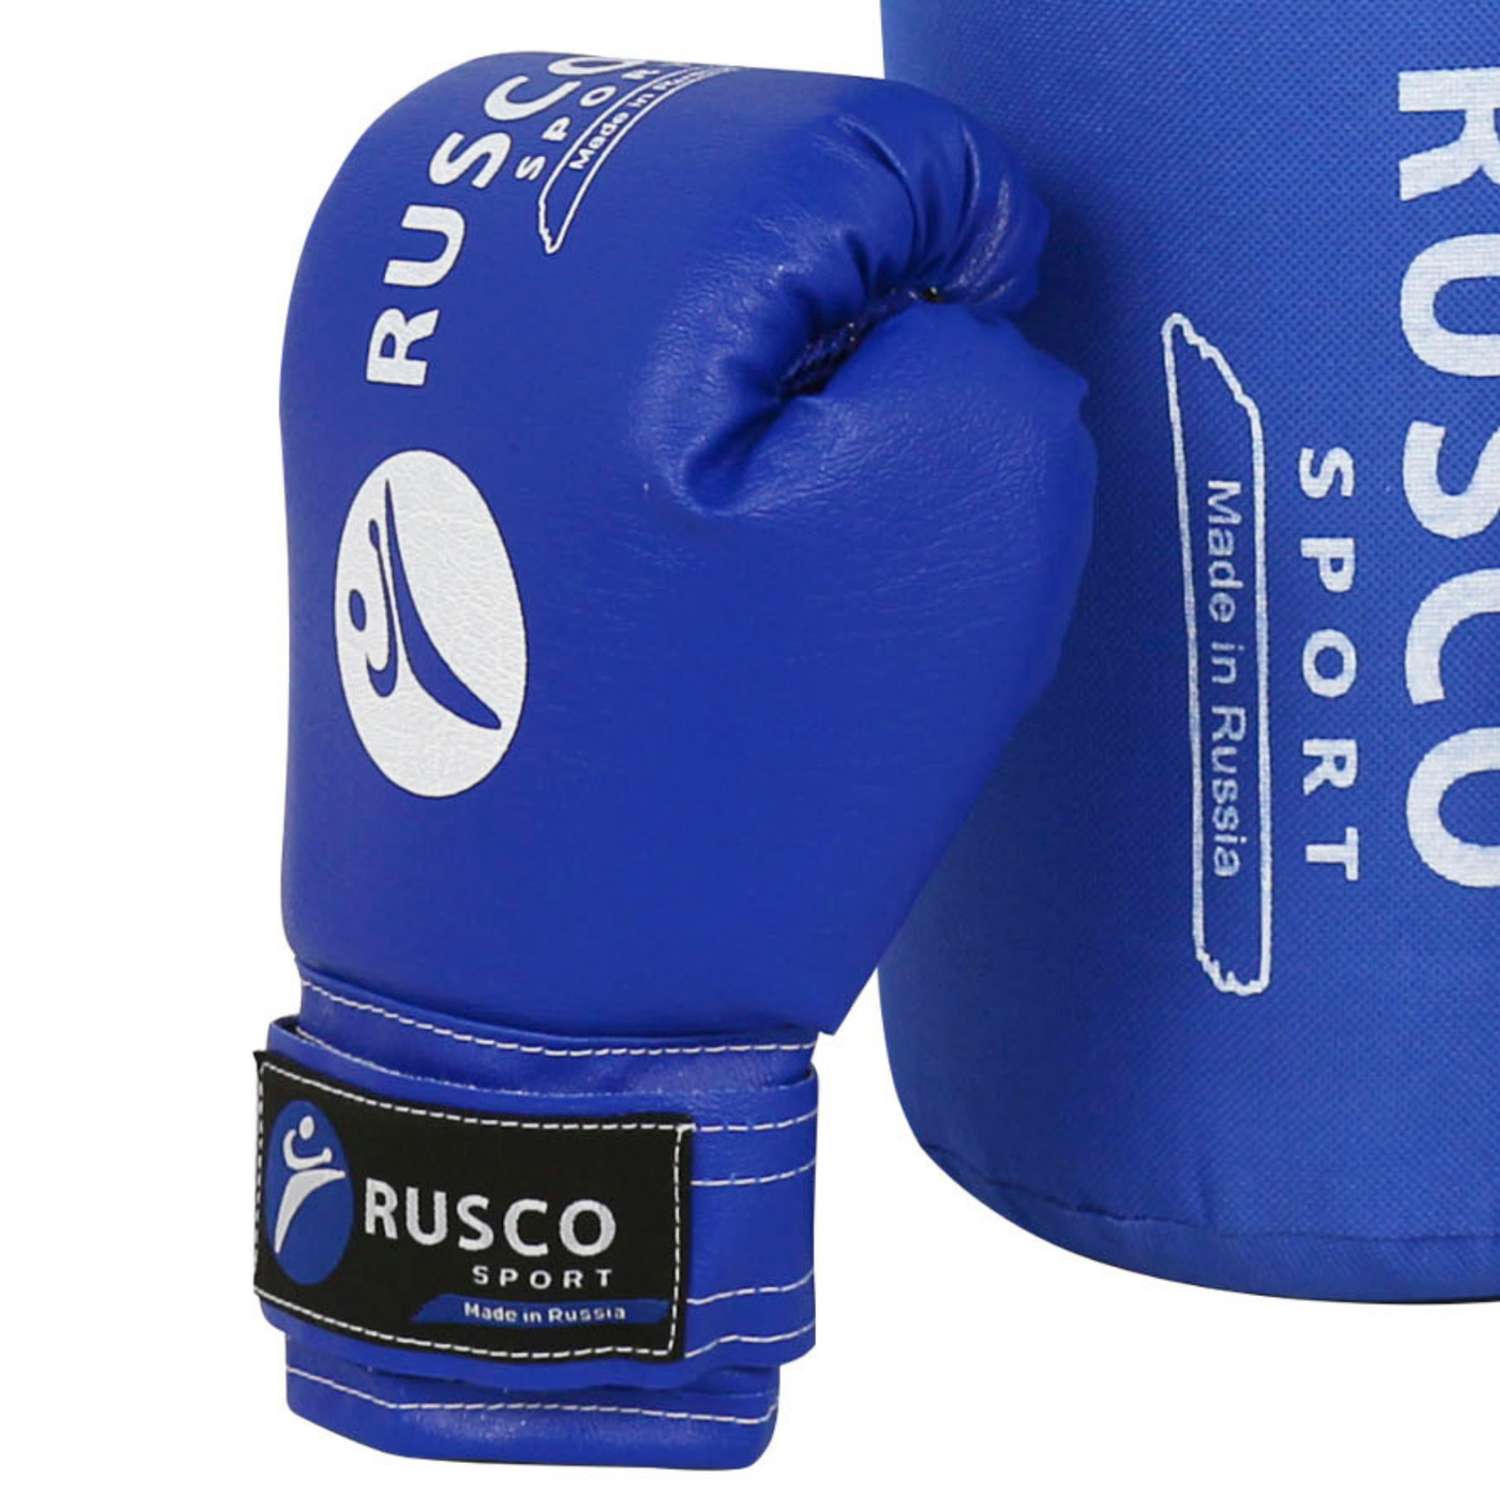 Набор для бокса RuscoSport синий 4OZ - фото 2